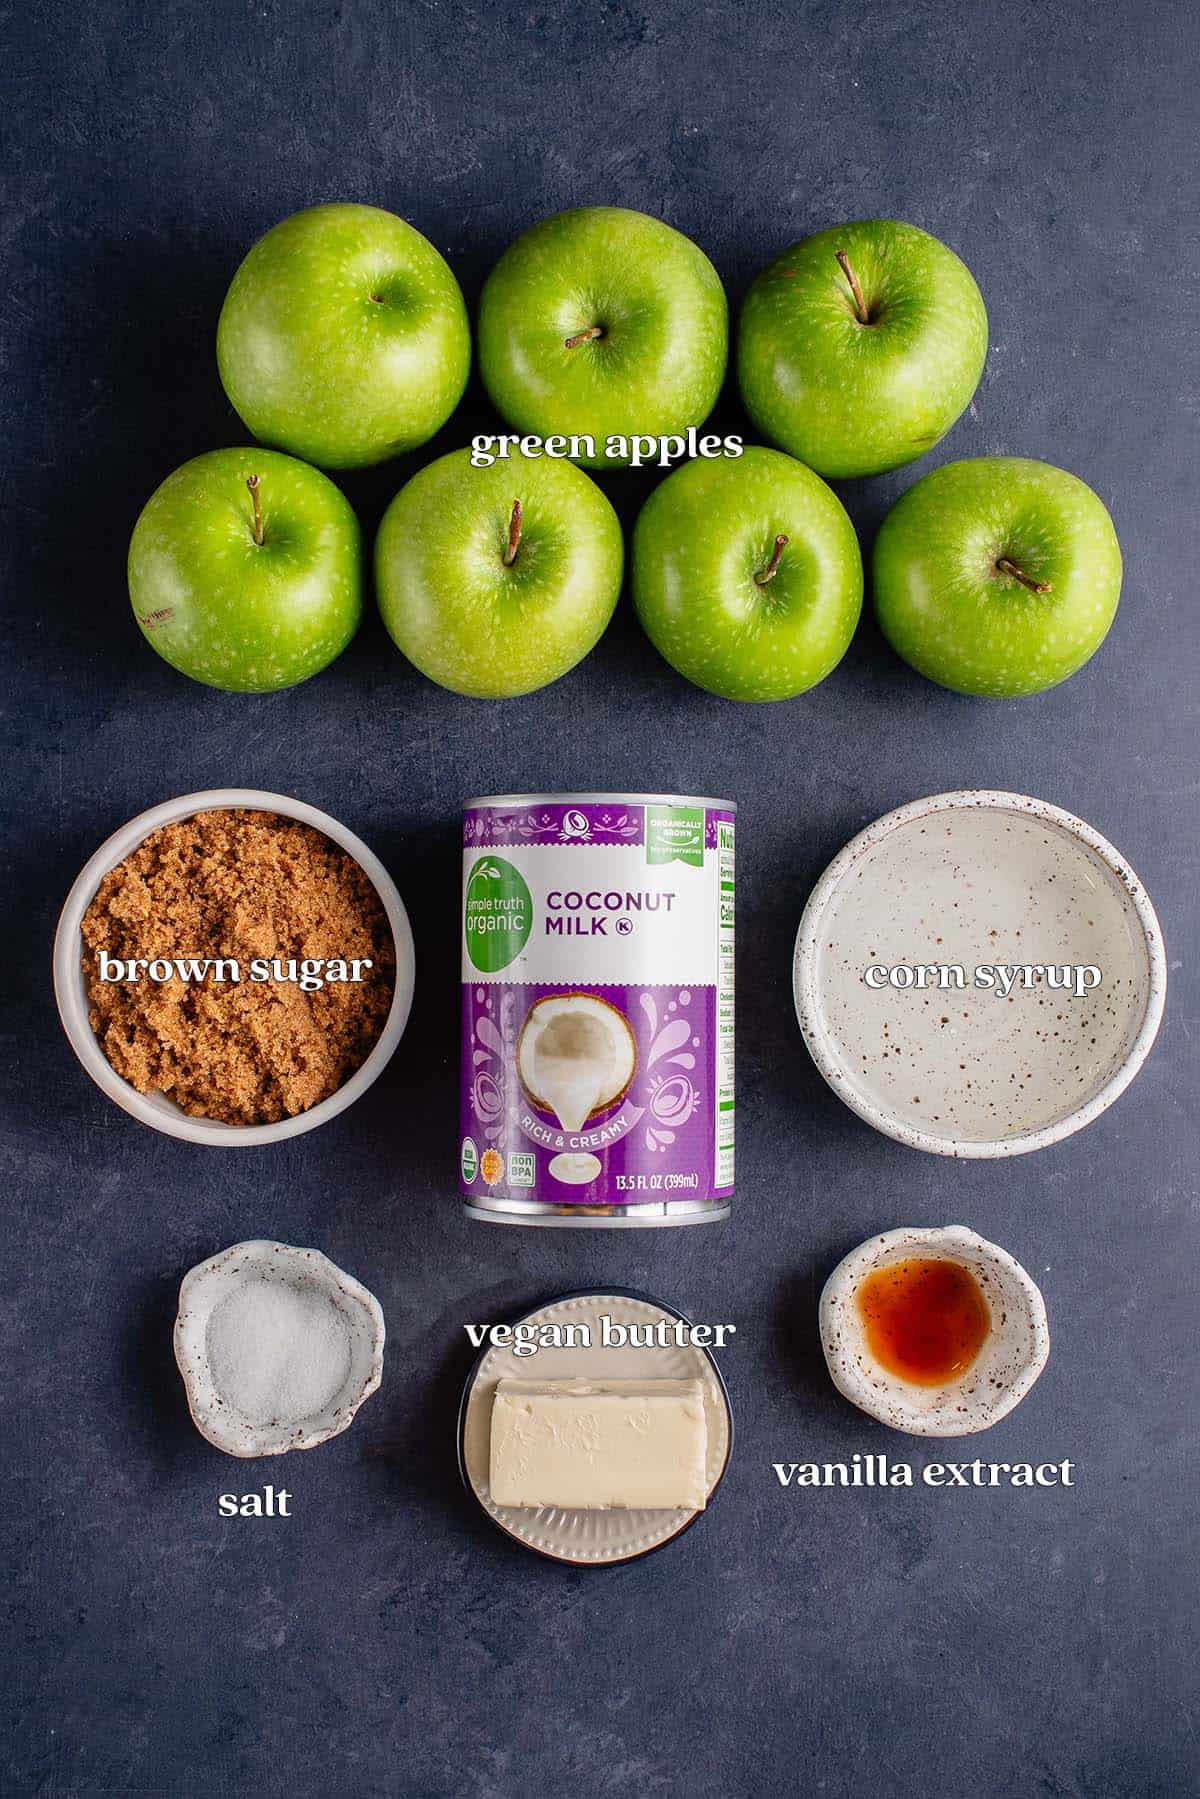 ingredients: green apples, brown sugar, coconut milk, corn syrup, salt, vegan butter and vanilla extract